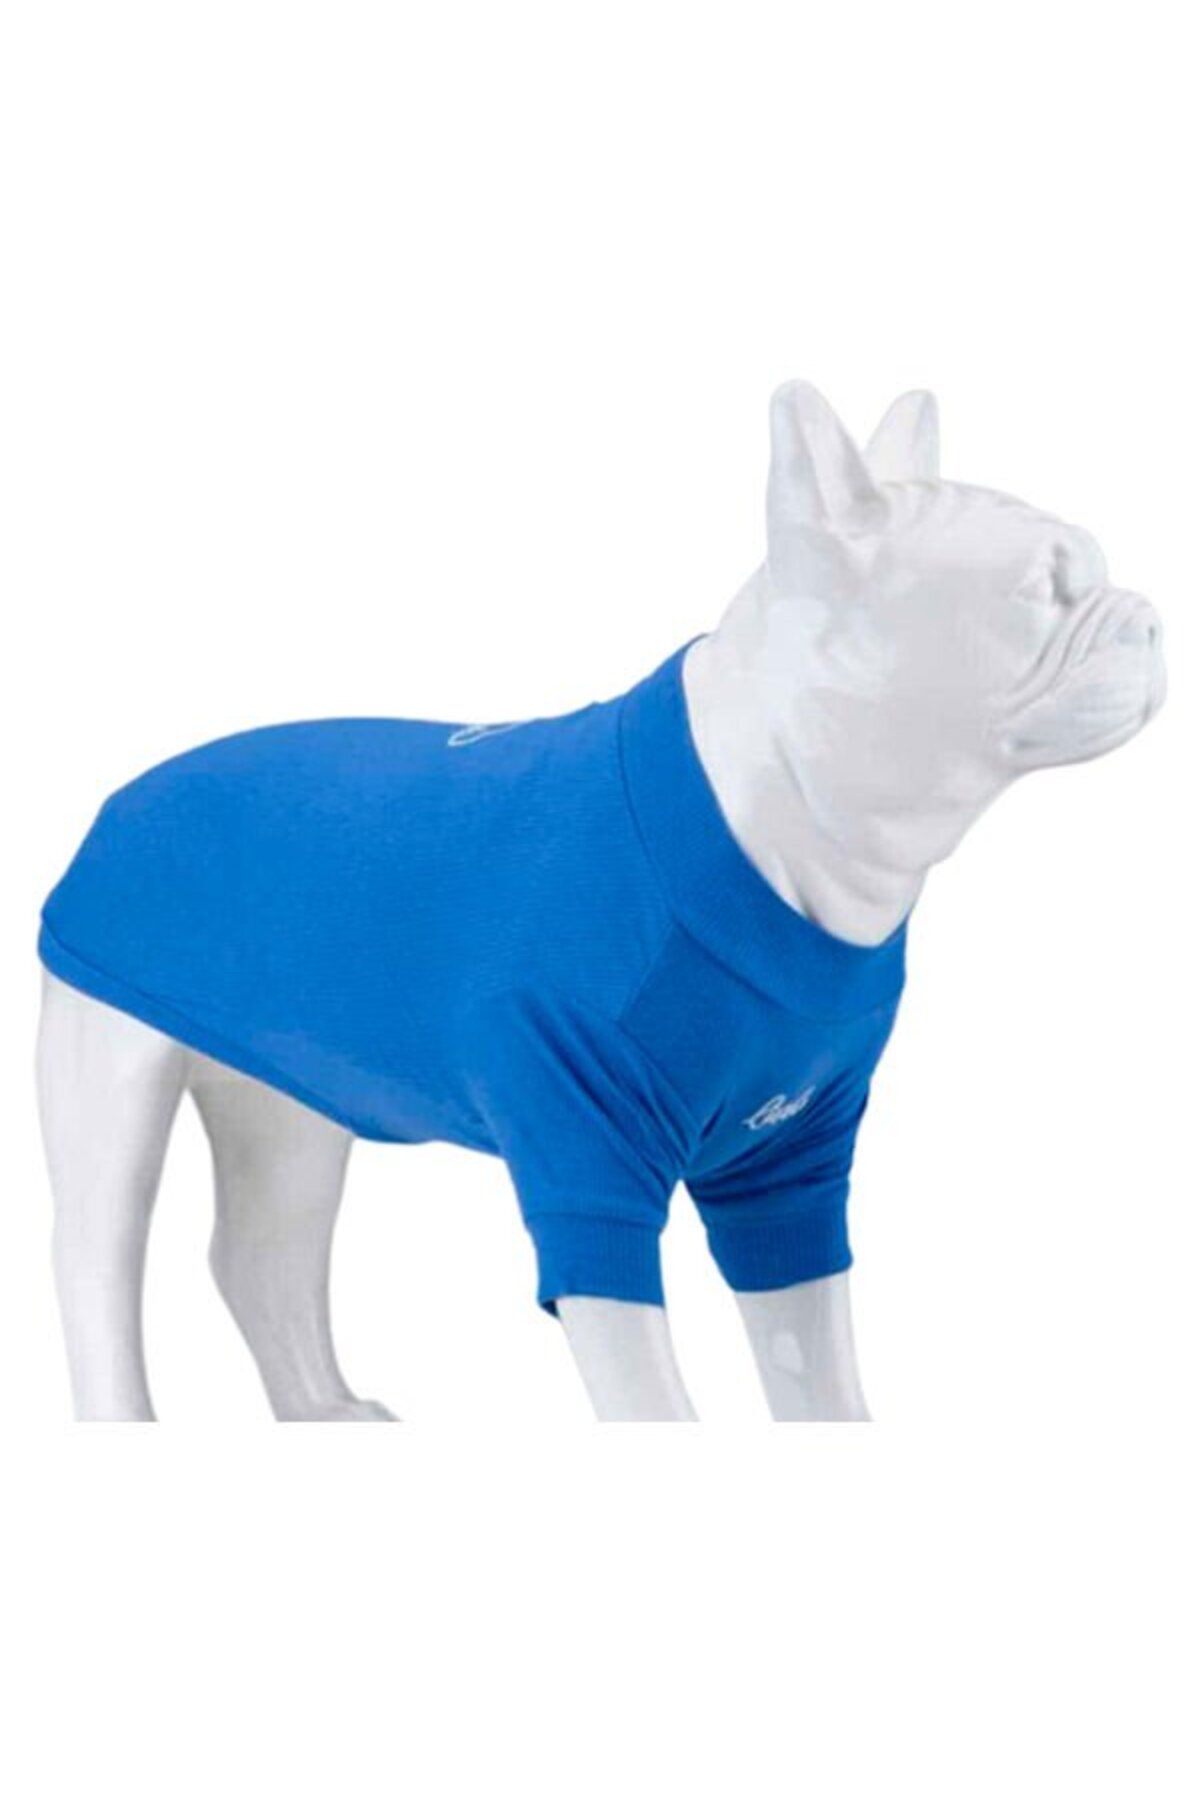 Lindodogs Lindo Dogs On The Clouds Köpek Kıyafeti Tshirt Mavi Beden 5